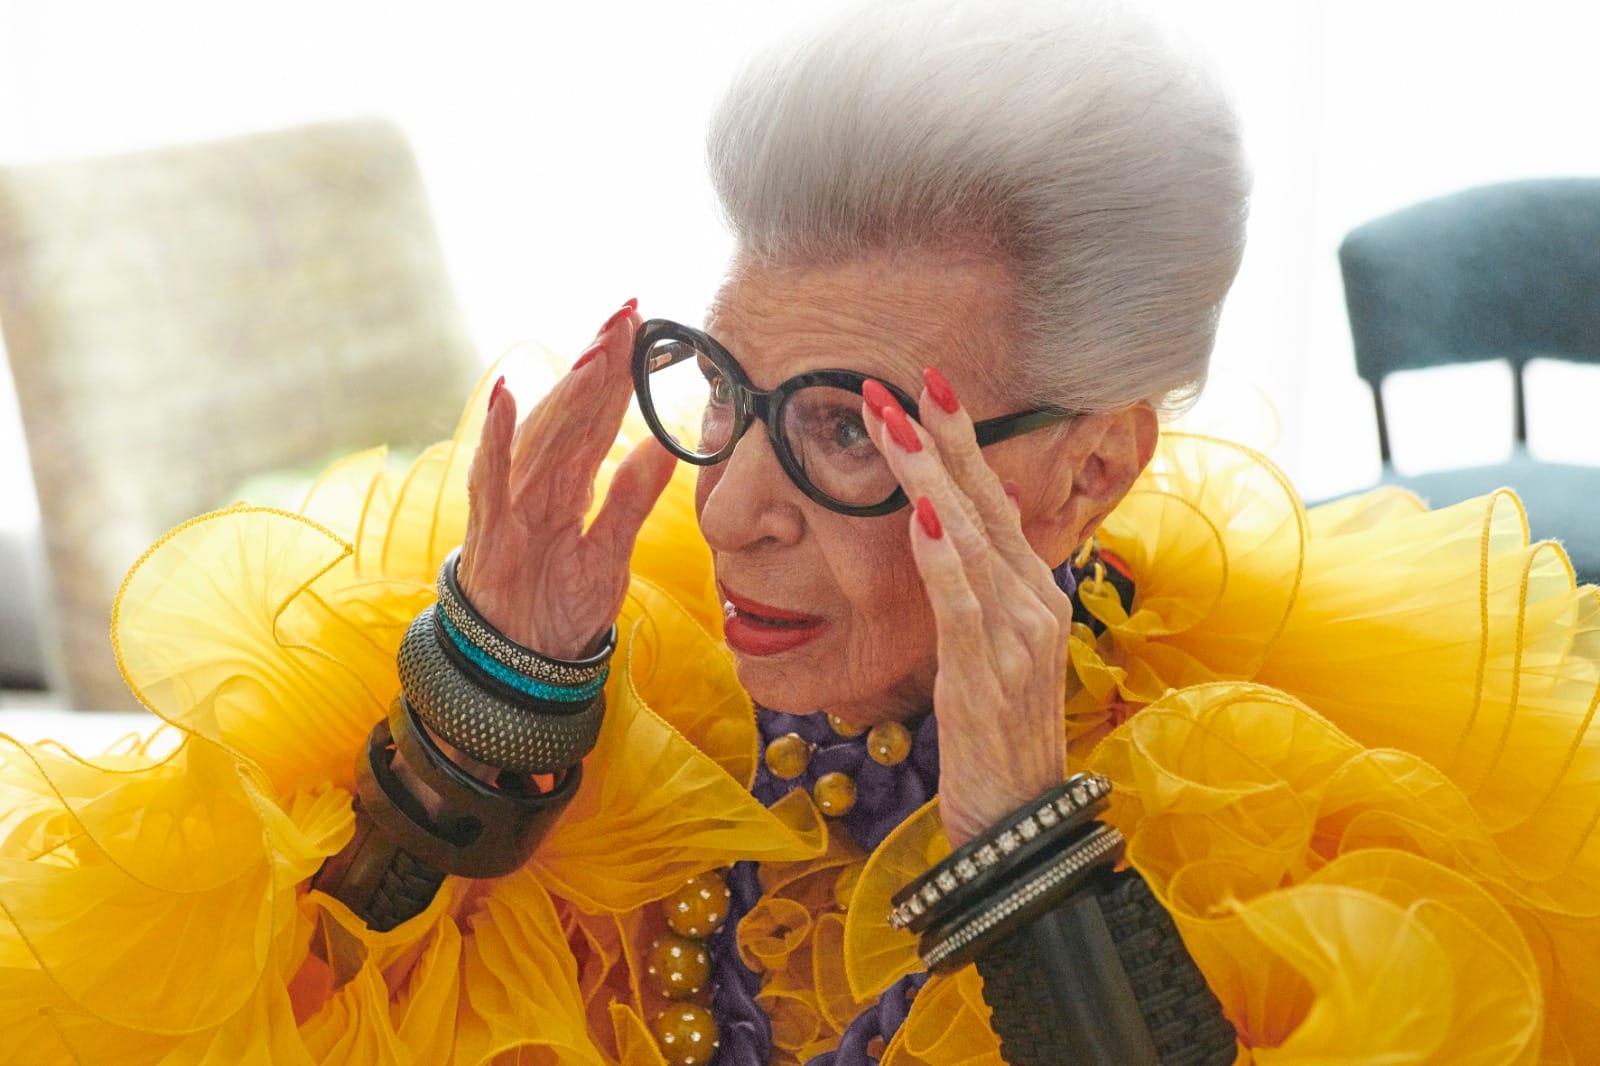 Iris Apfel recently celebrated her 100th birthday.